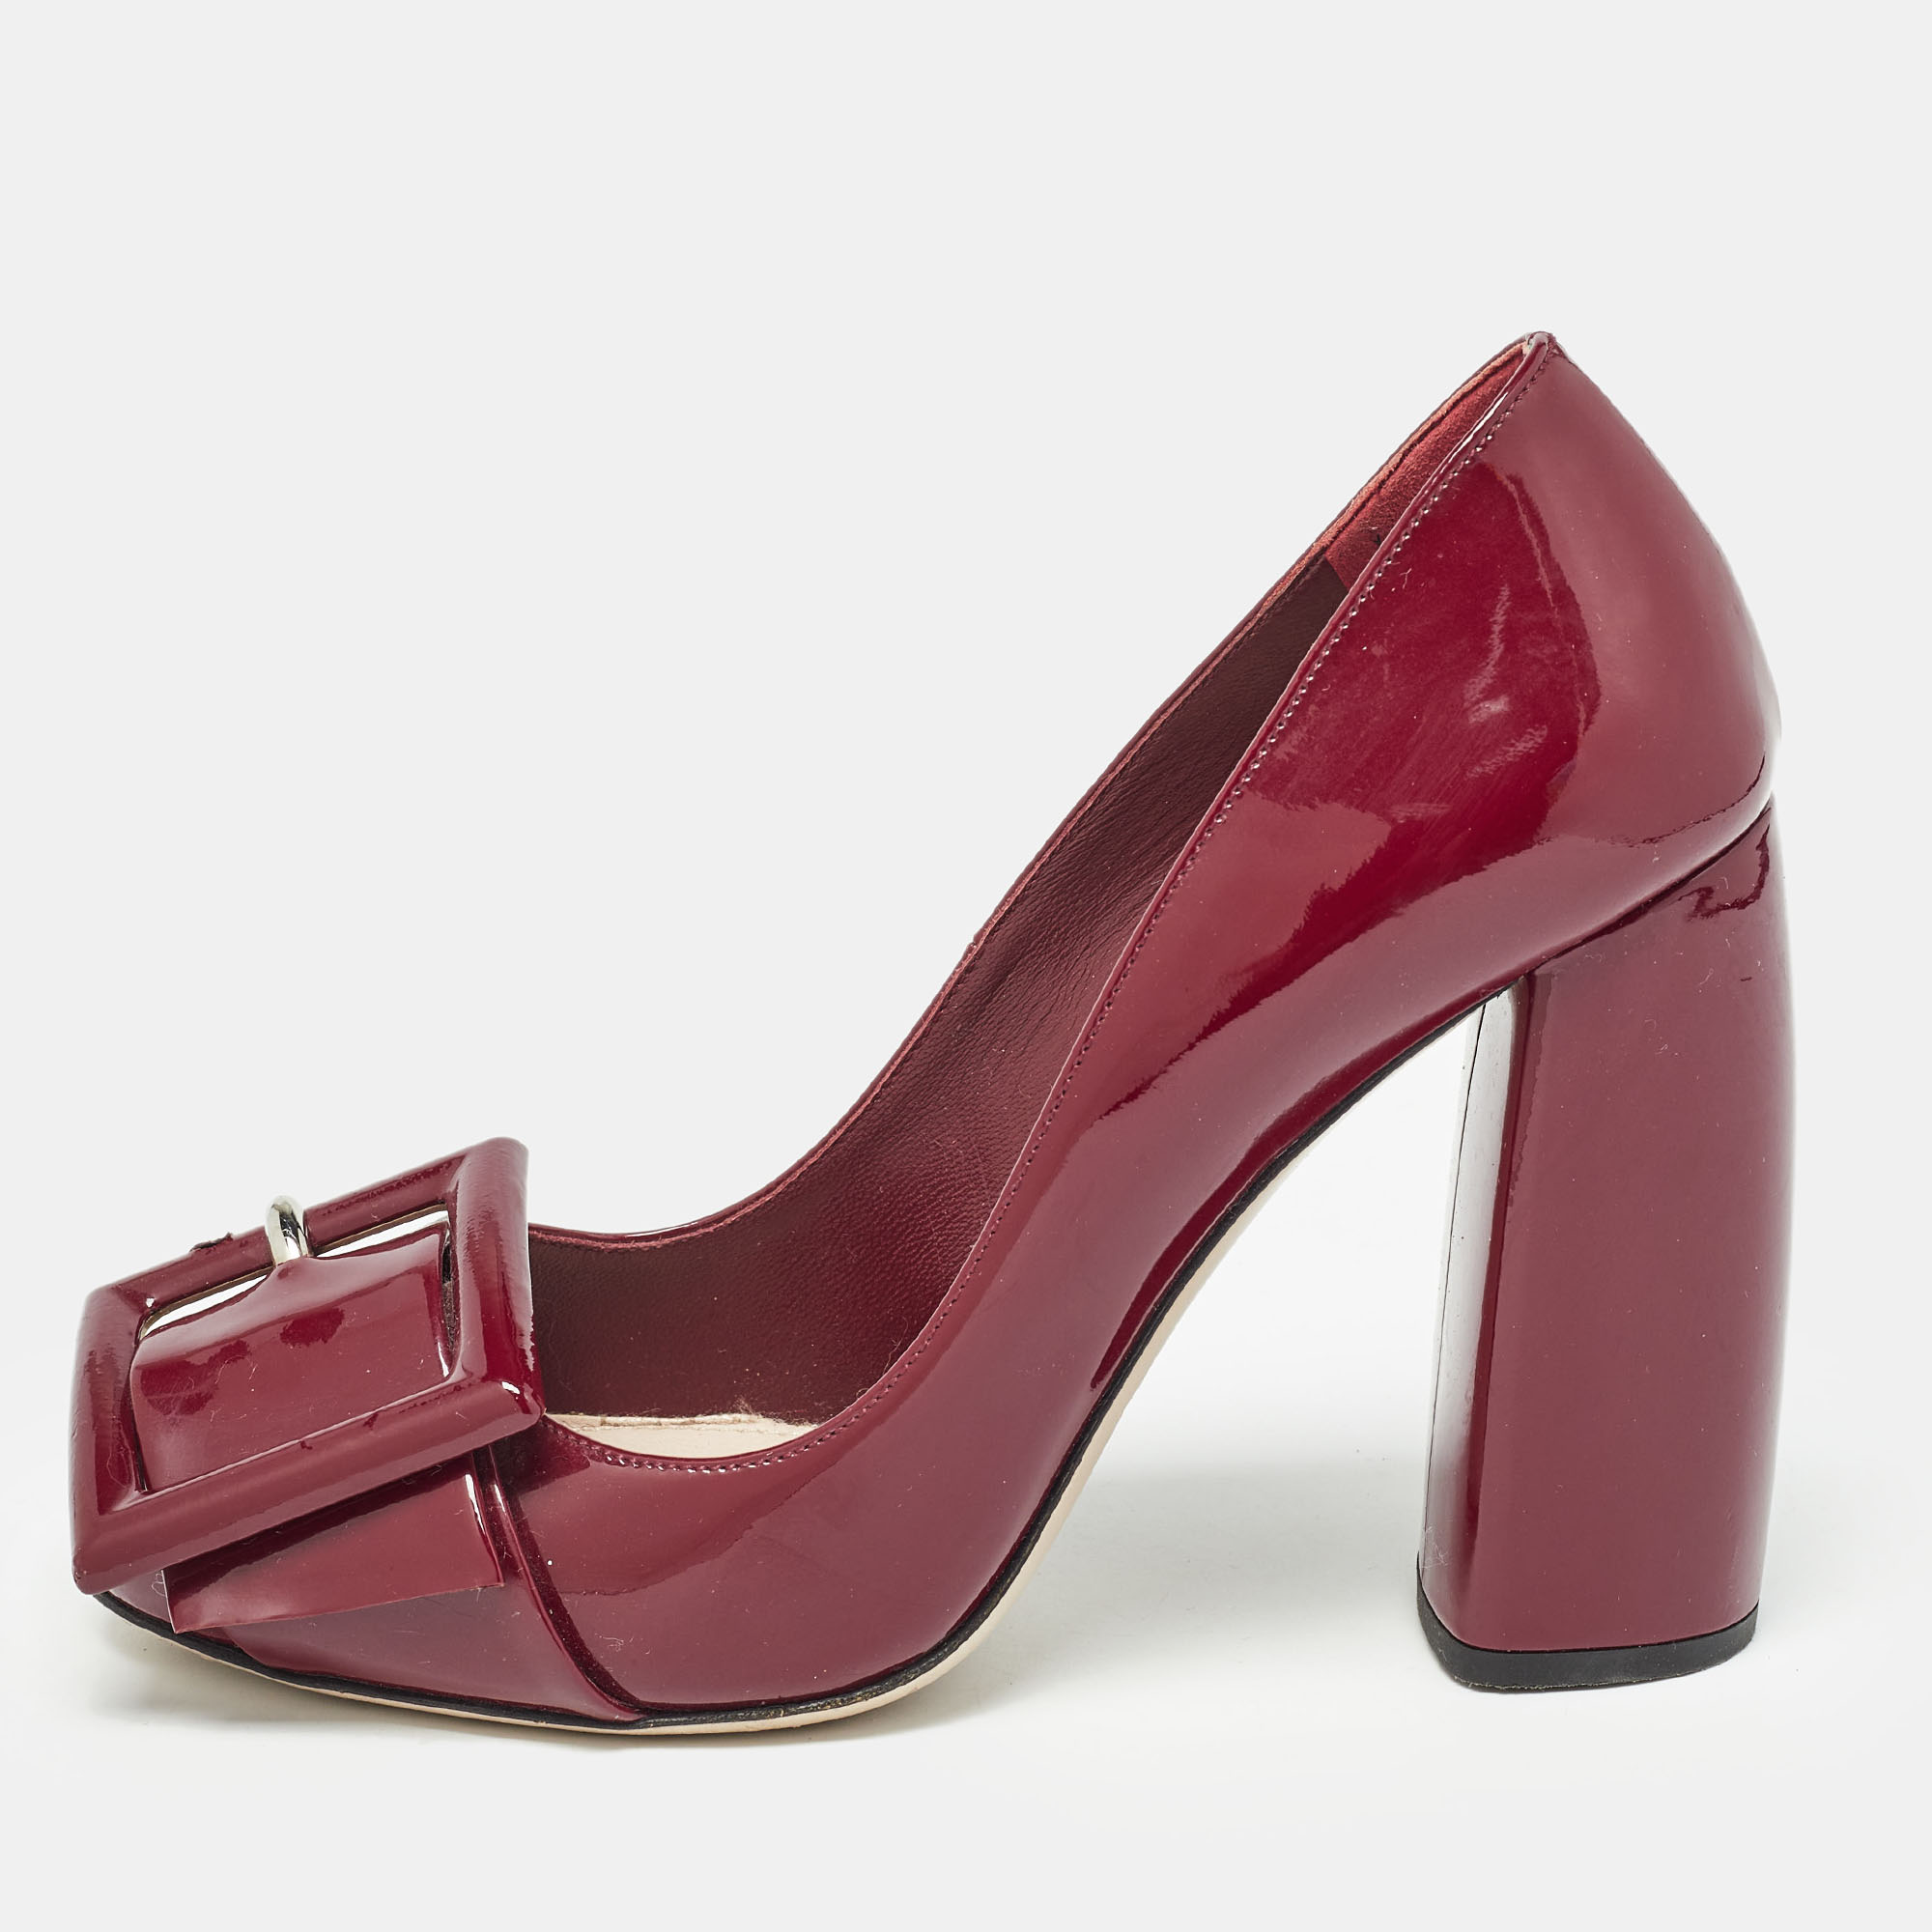 Miu miu burgundy patent leather buckle detail block heel pumps size 36